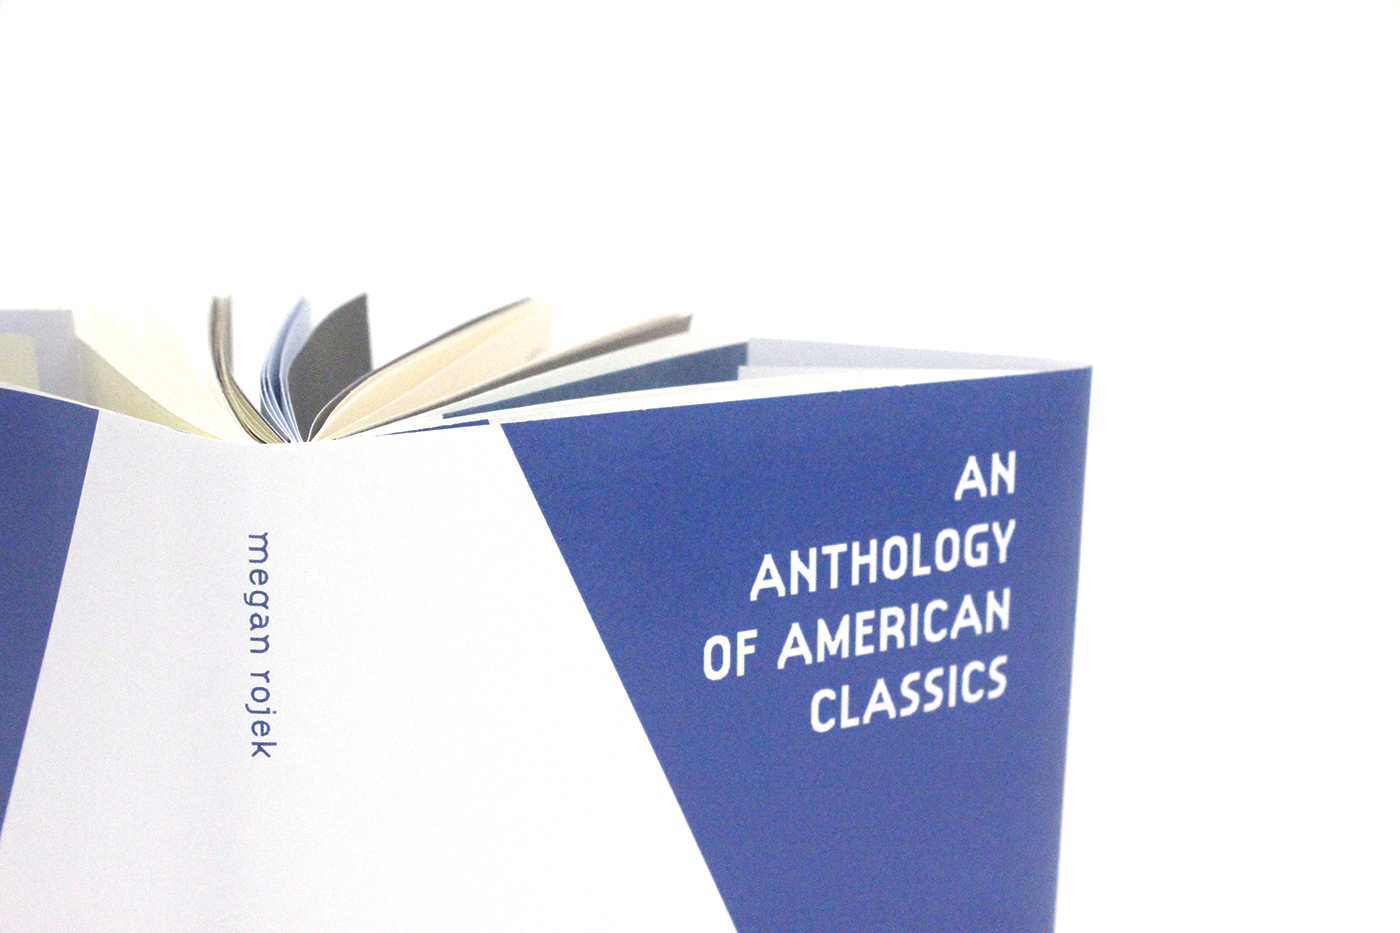 book design pages novel america classics cookbook edgar allen poe Civil War Benjamin Franklin